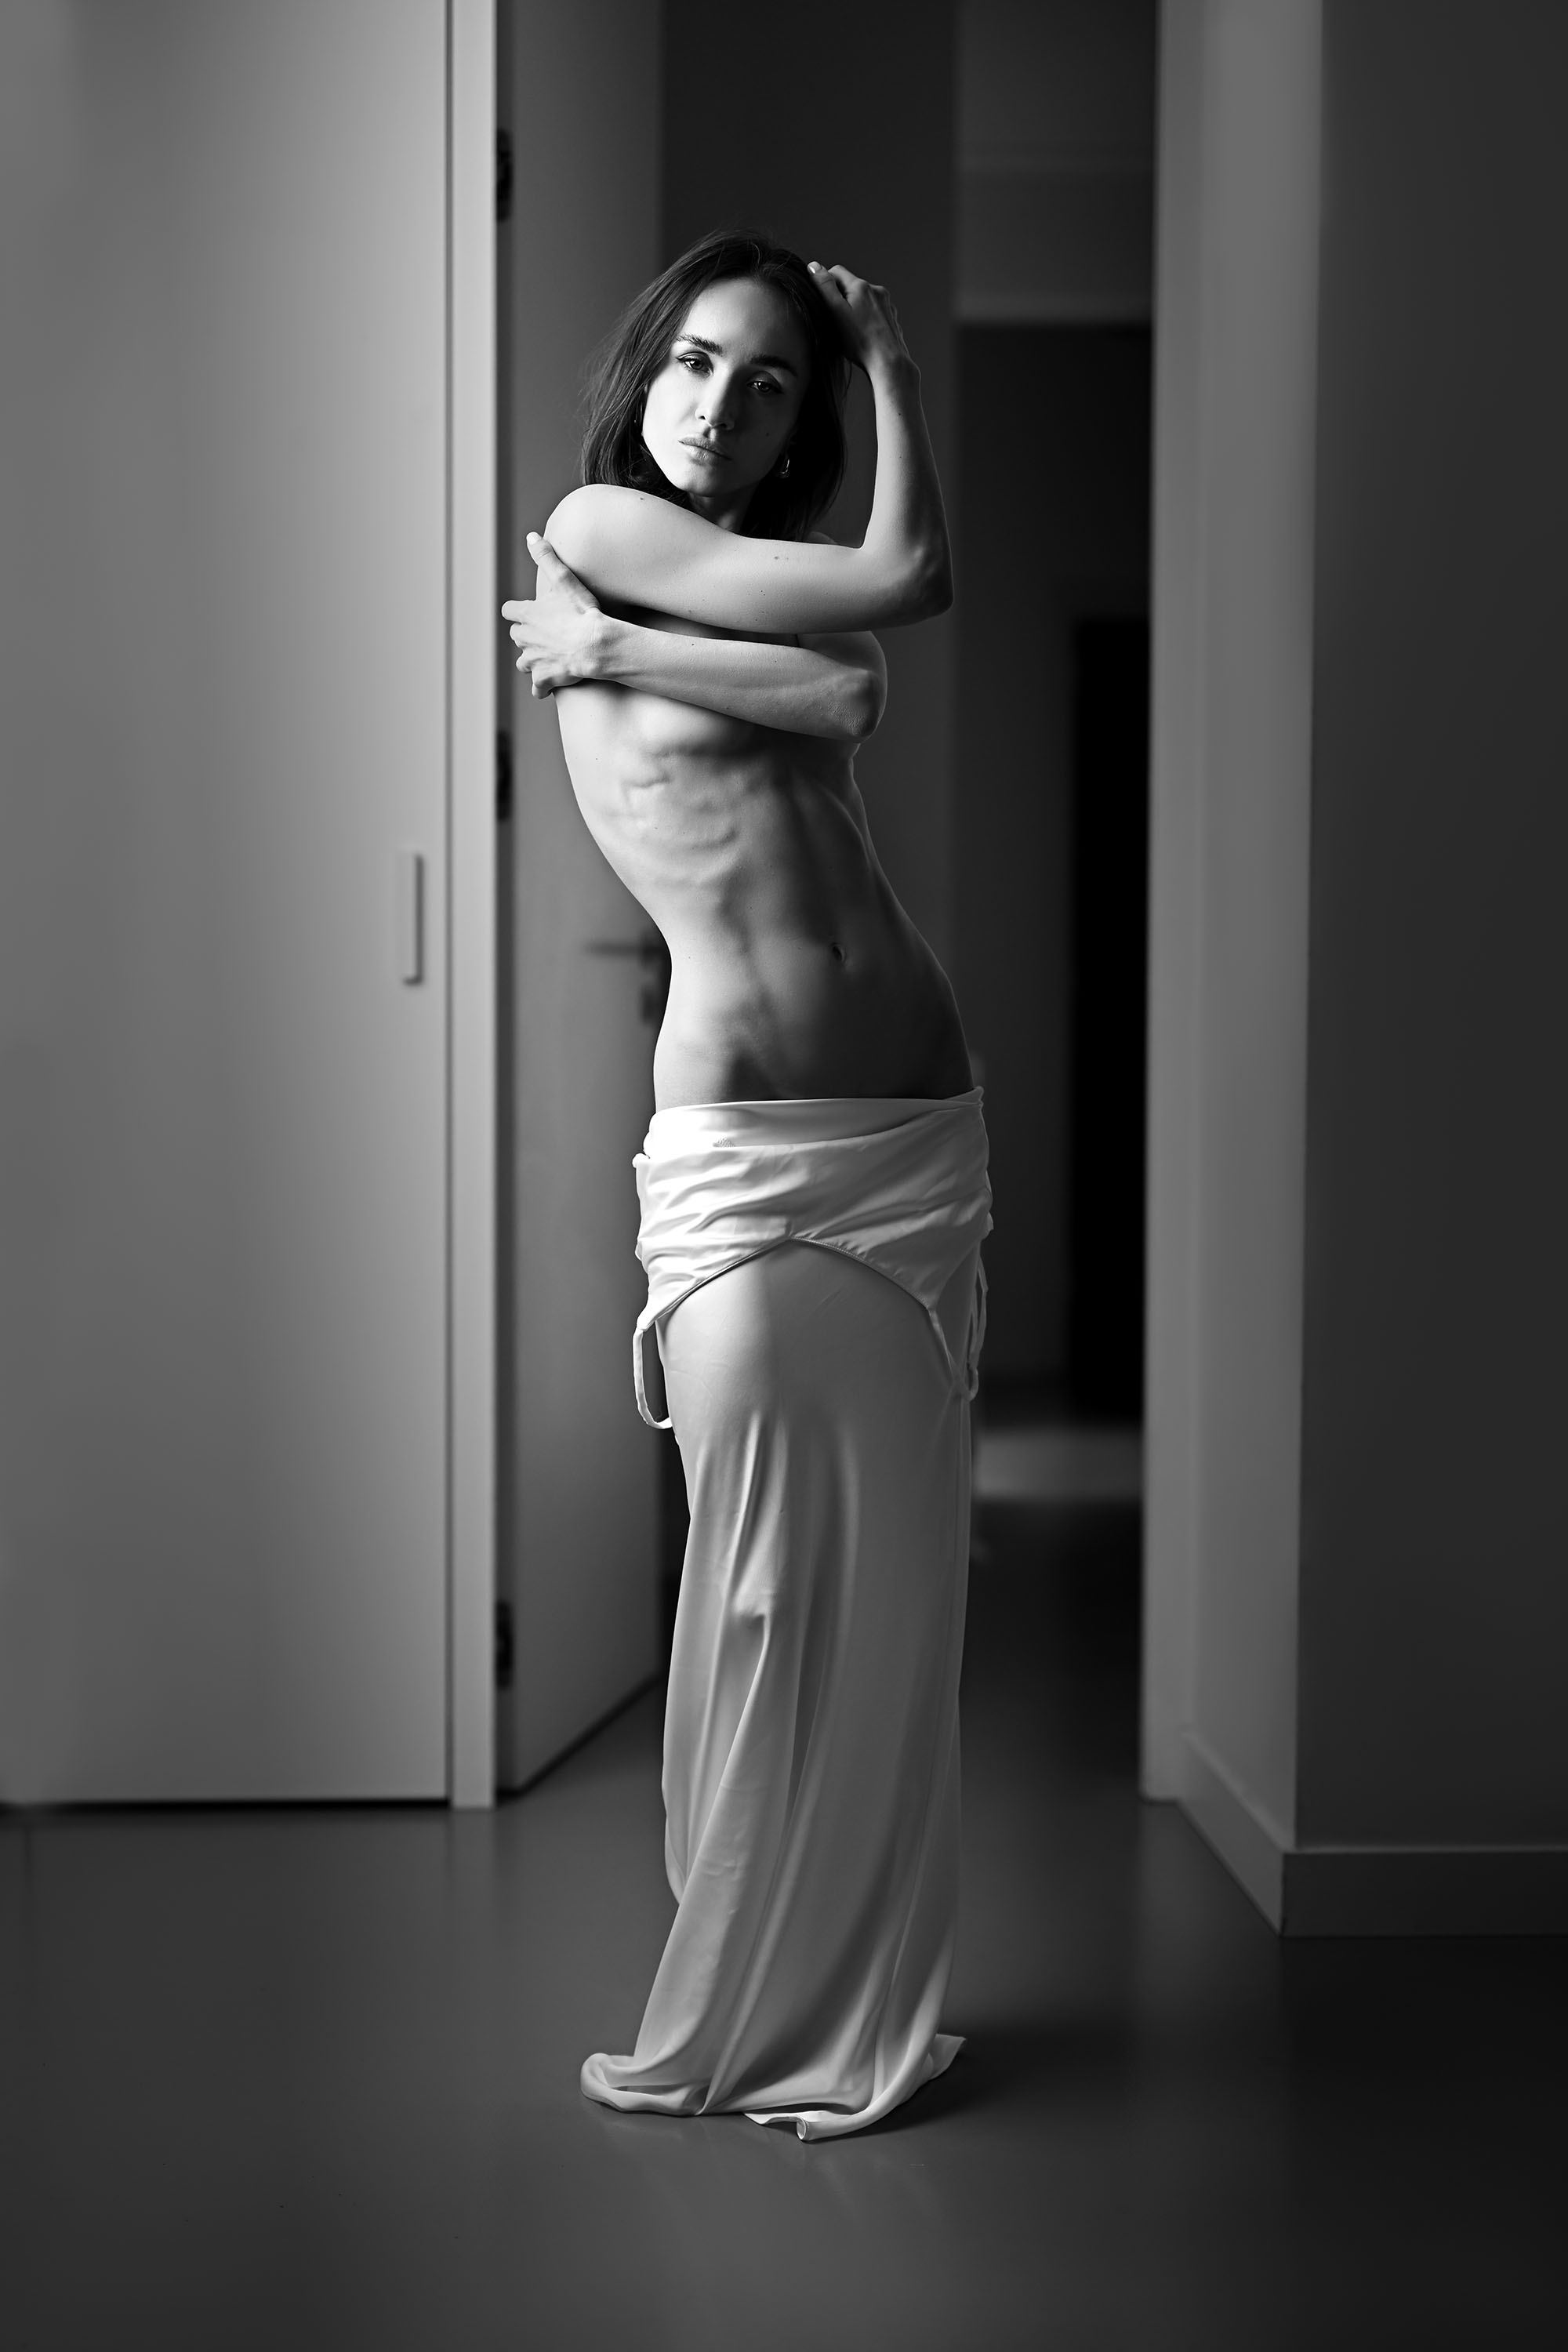 Vita Goncharuk, model from Ukraine at a boudoir photoshoot